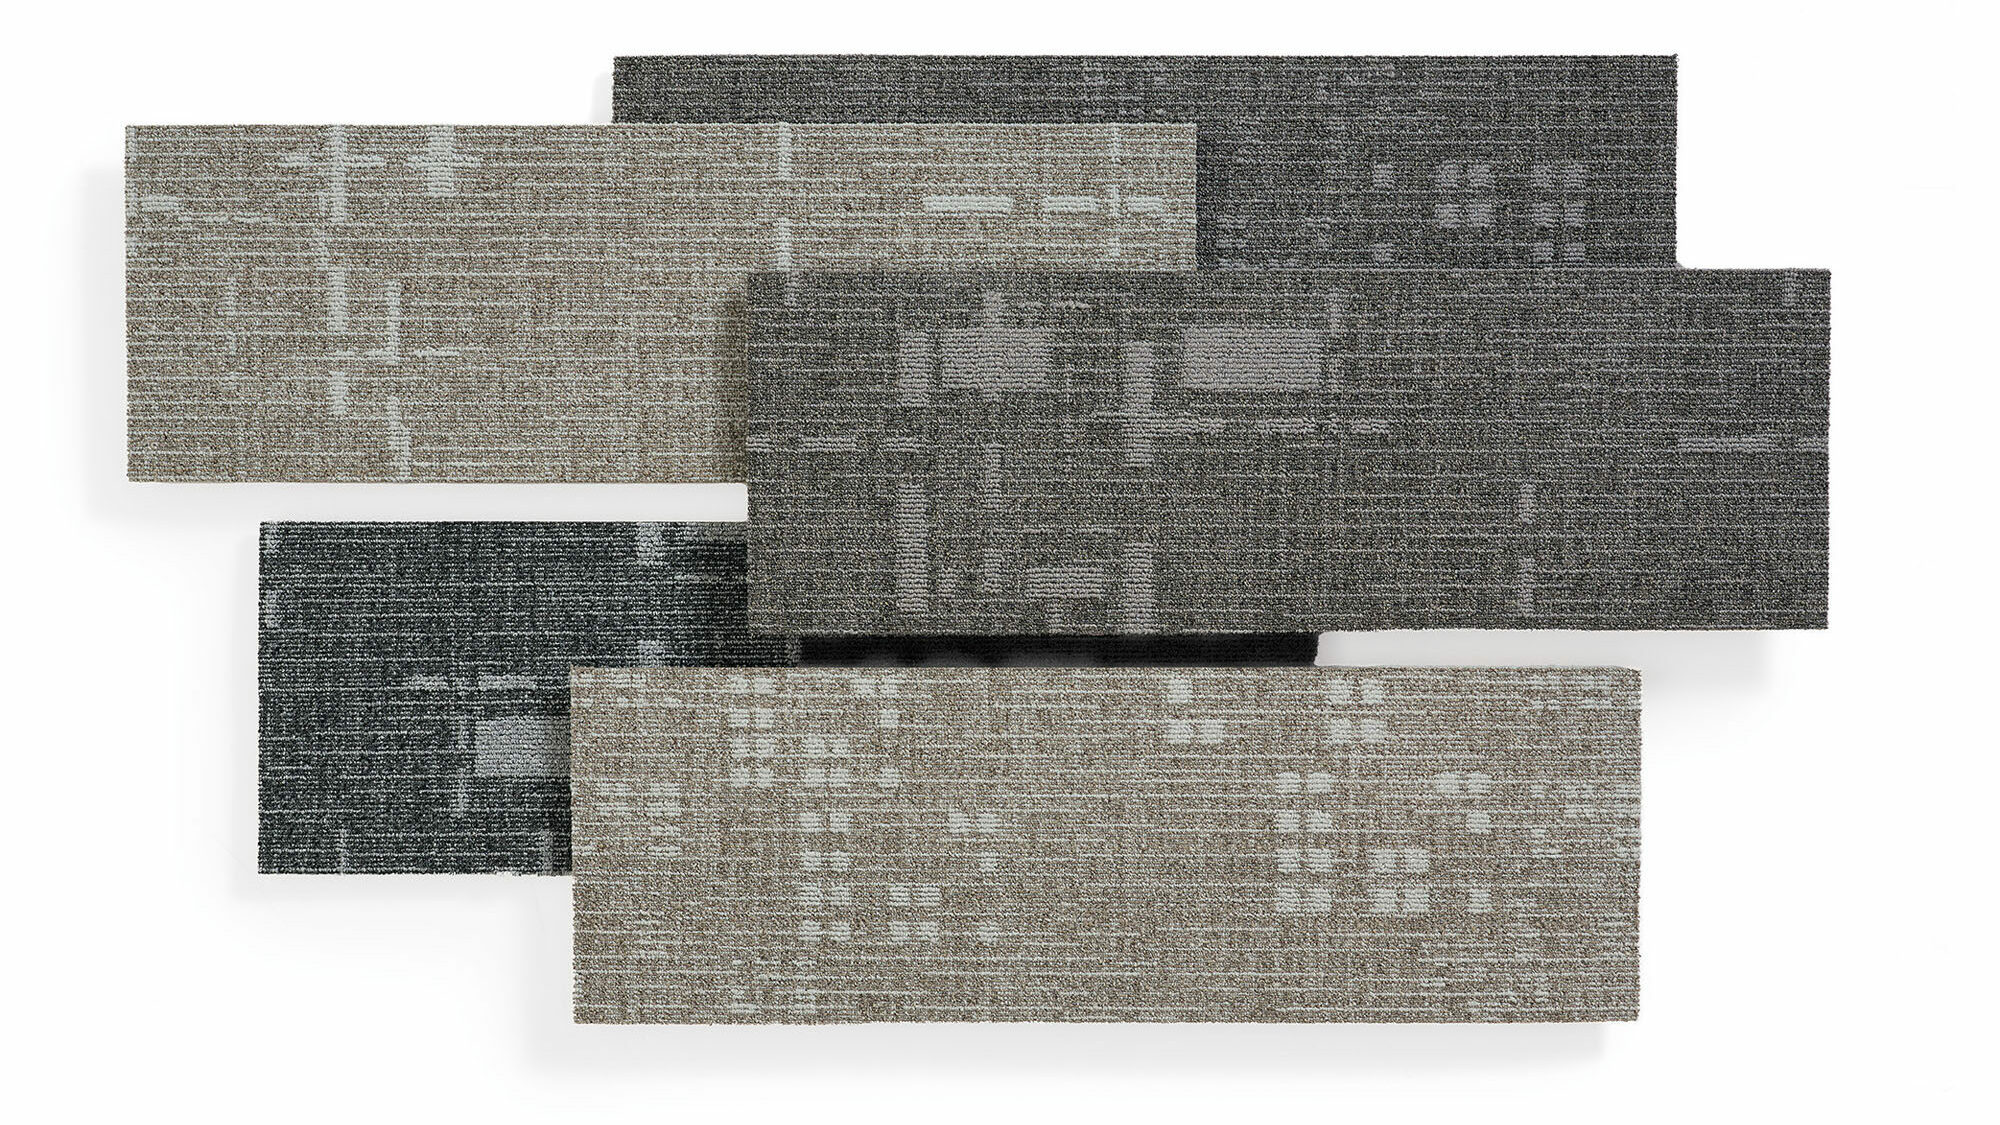 carpet samples with a geometric design